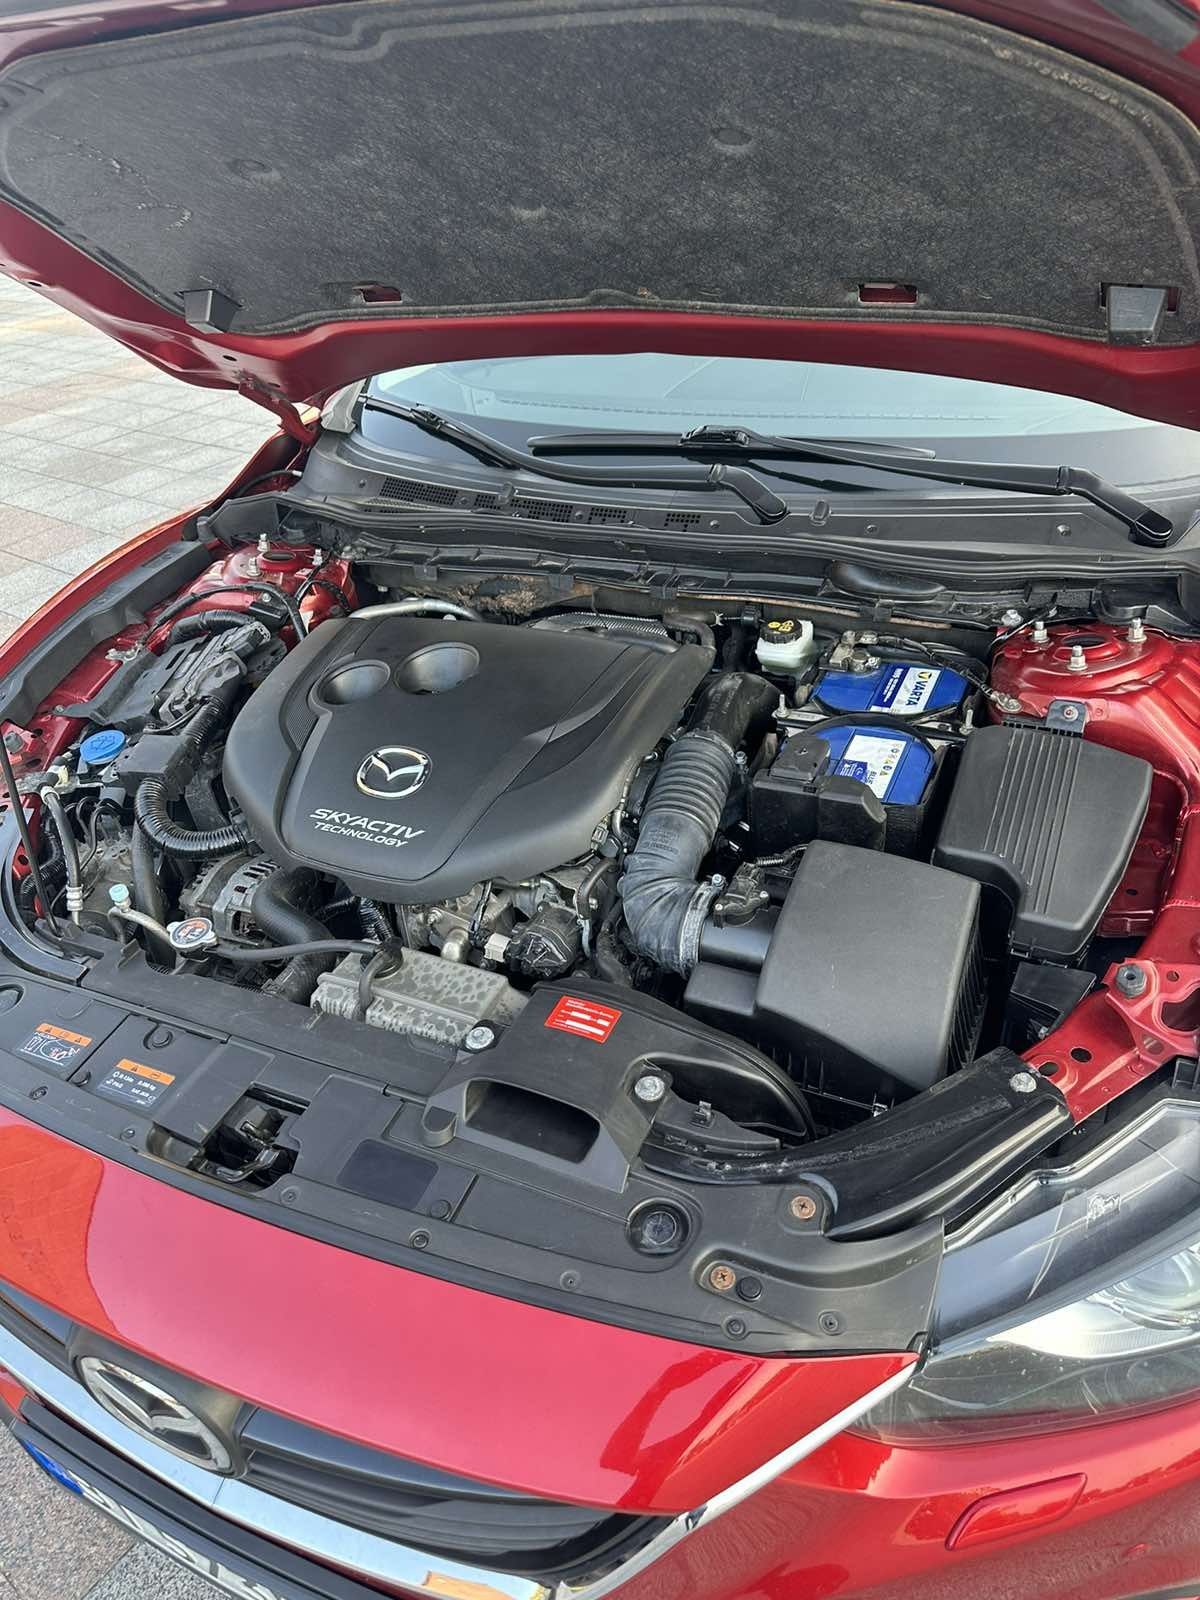 Mazda 6 2014 года